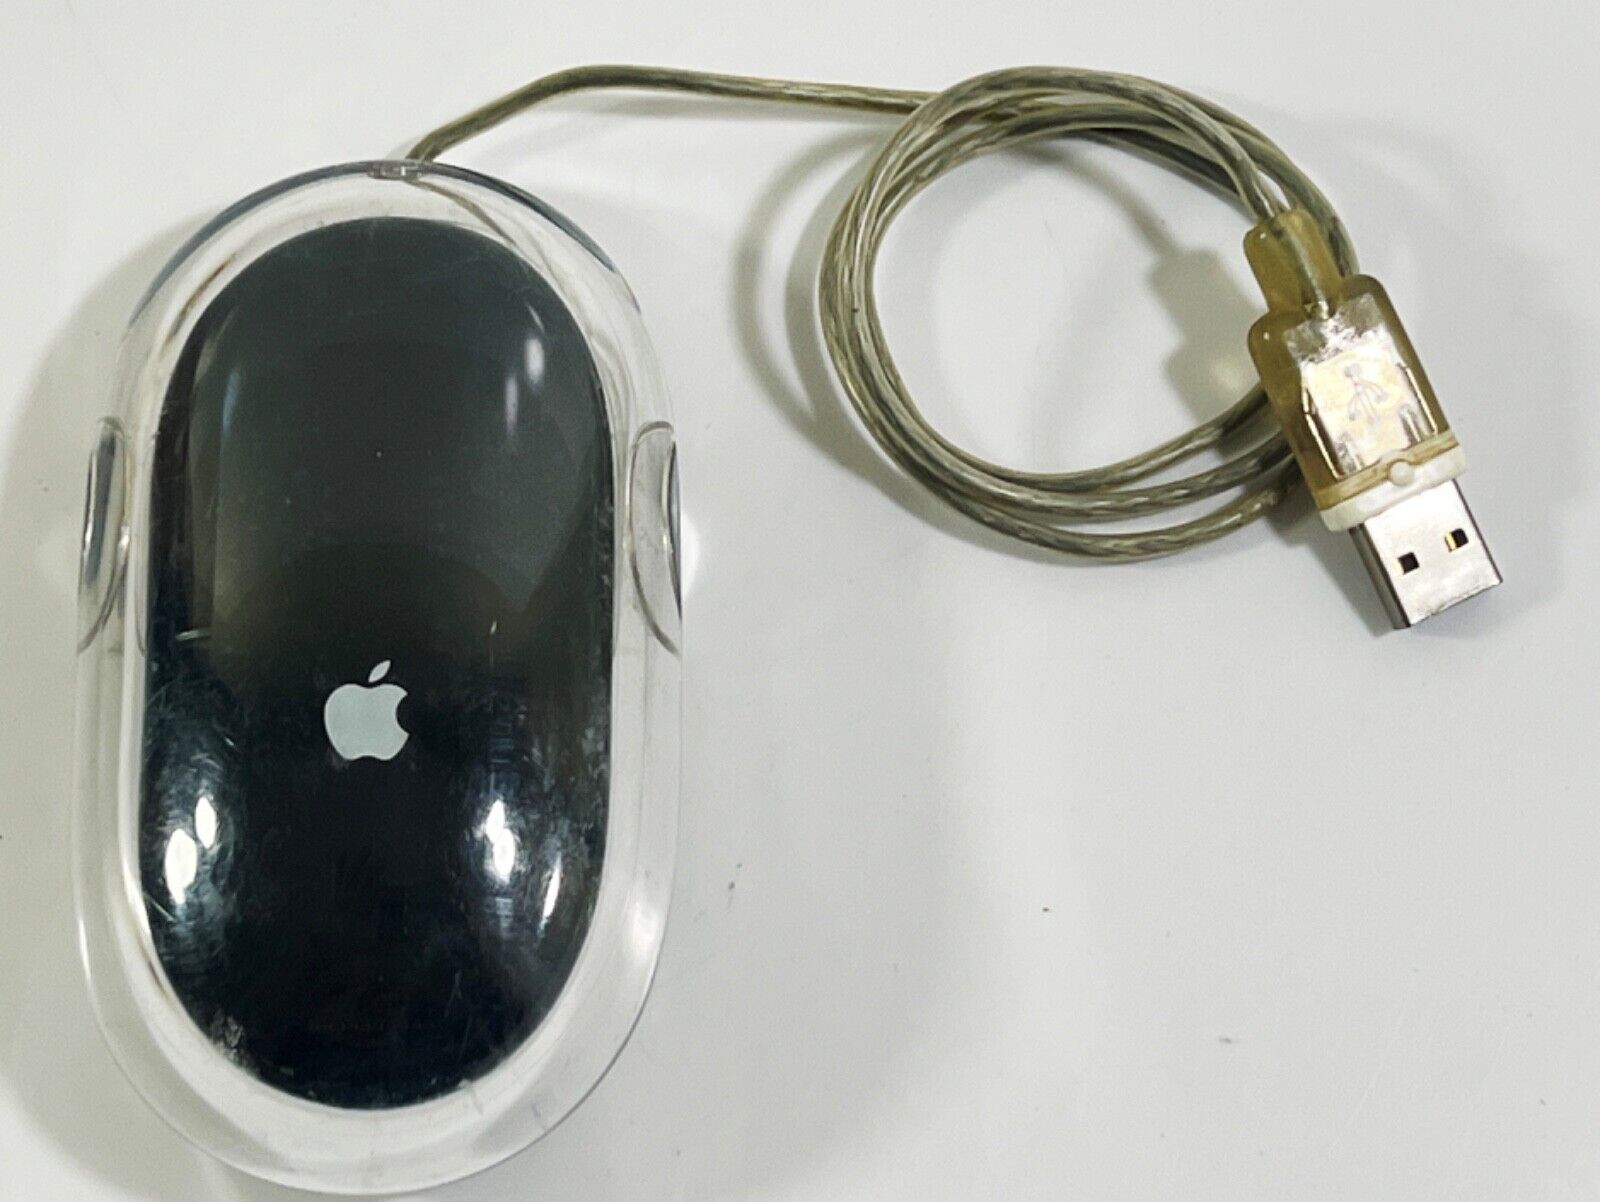 Vintage Original Apple Pro Optical Mouse Model M5769, Black & Clear - USB Mac